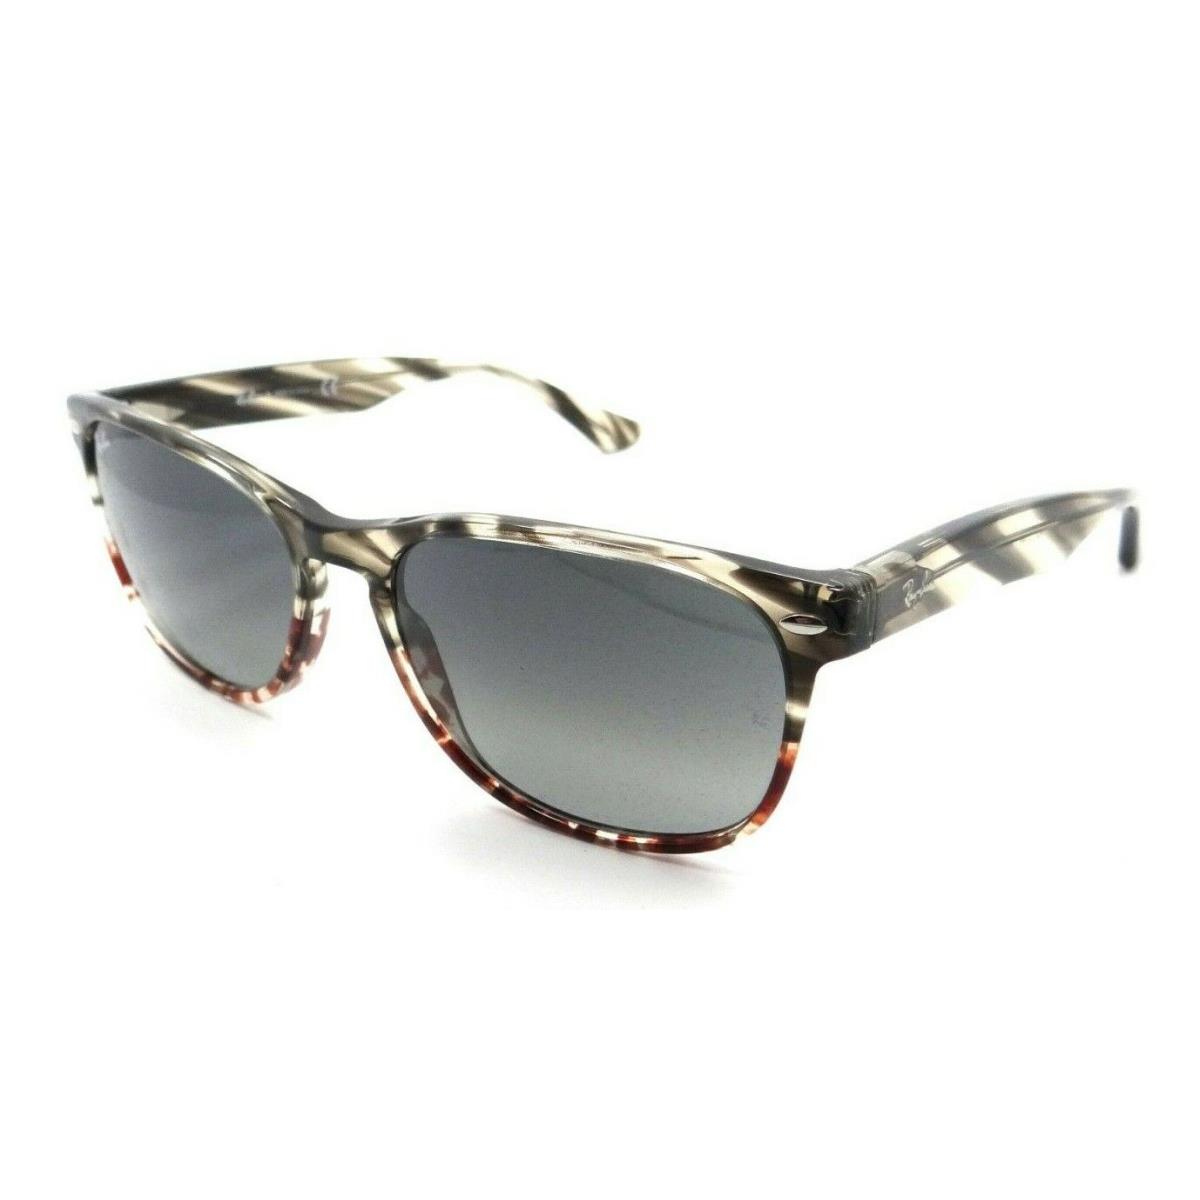 Ray-ban Sunglasses RB 2184 1254/71 57-18-145 Striped Grey - Havana/grey Gradient